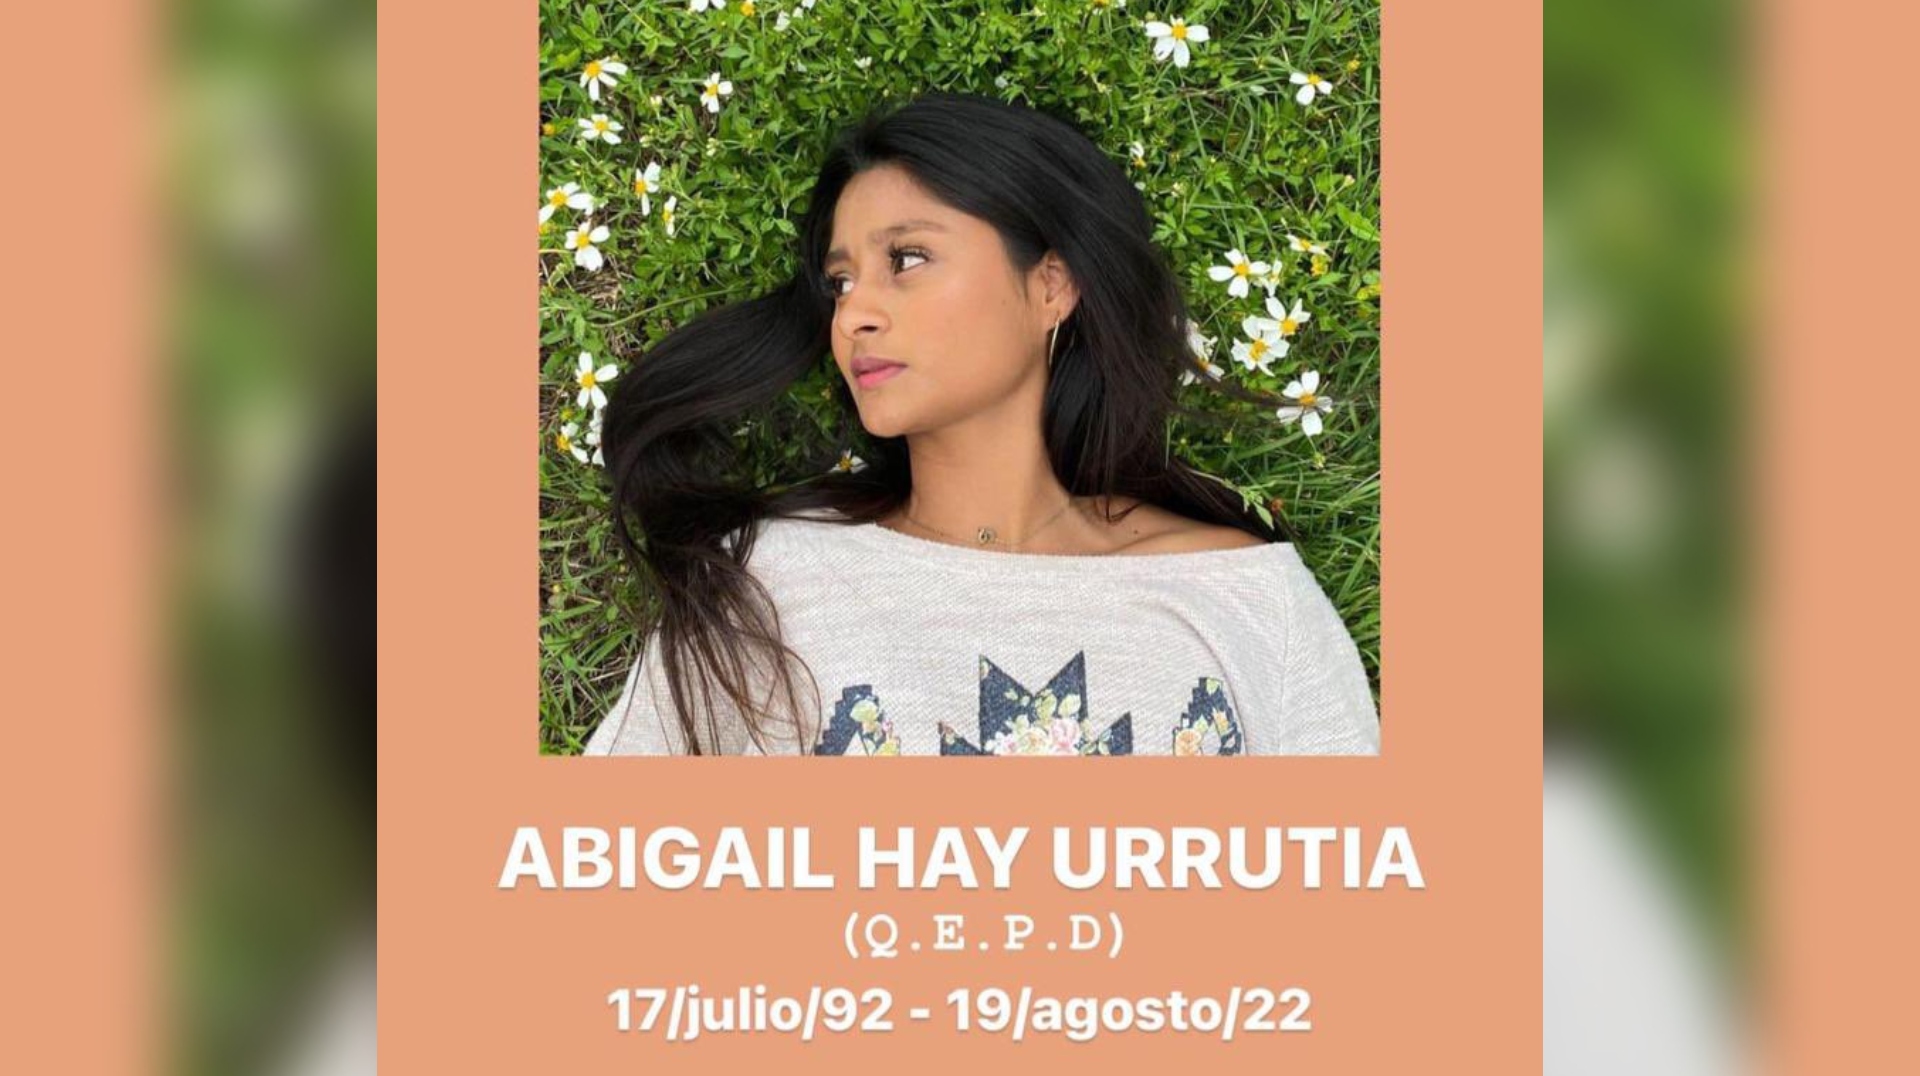 Abigail Hay Urrutia